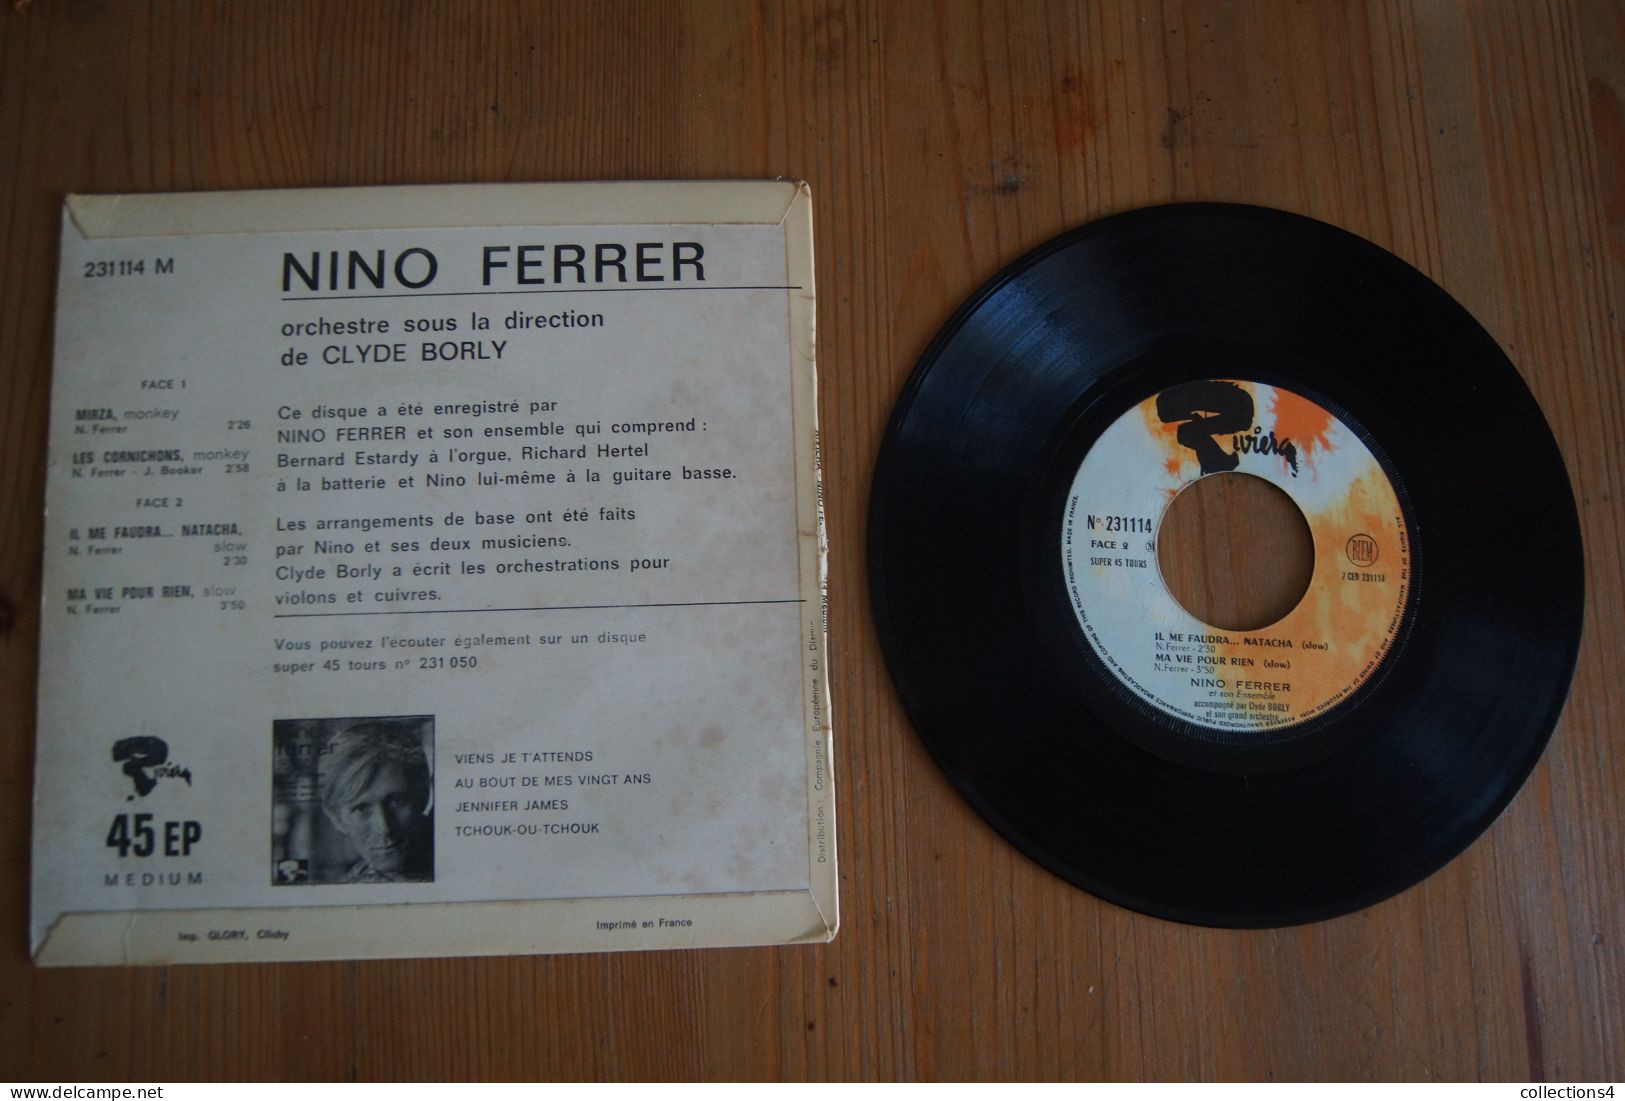 NINO FERRER Z AVEZ PAS VU MIRZA EP 1965 LANGUETTE - 45 Rpm - Maxi-Singles